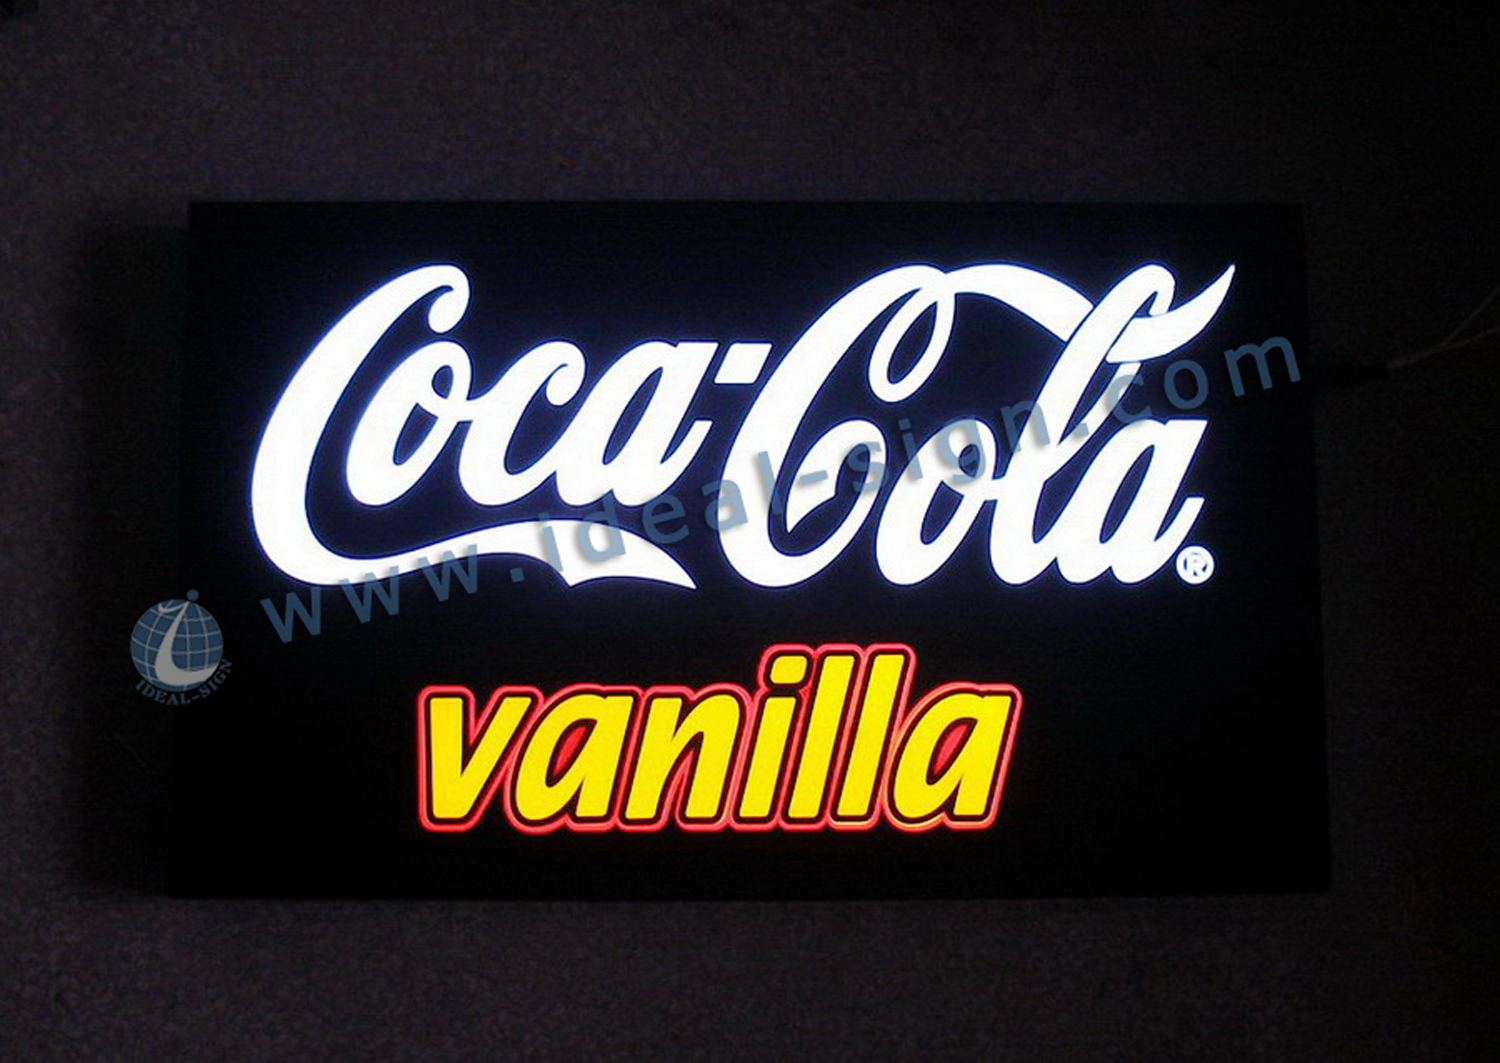 Coca Cola led lighted box